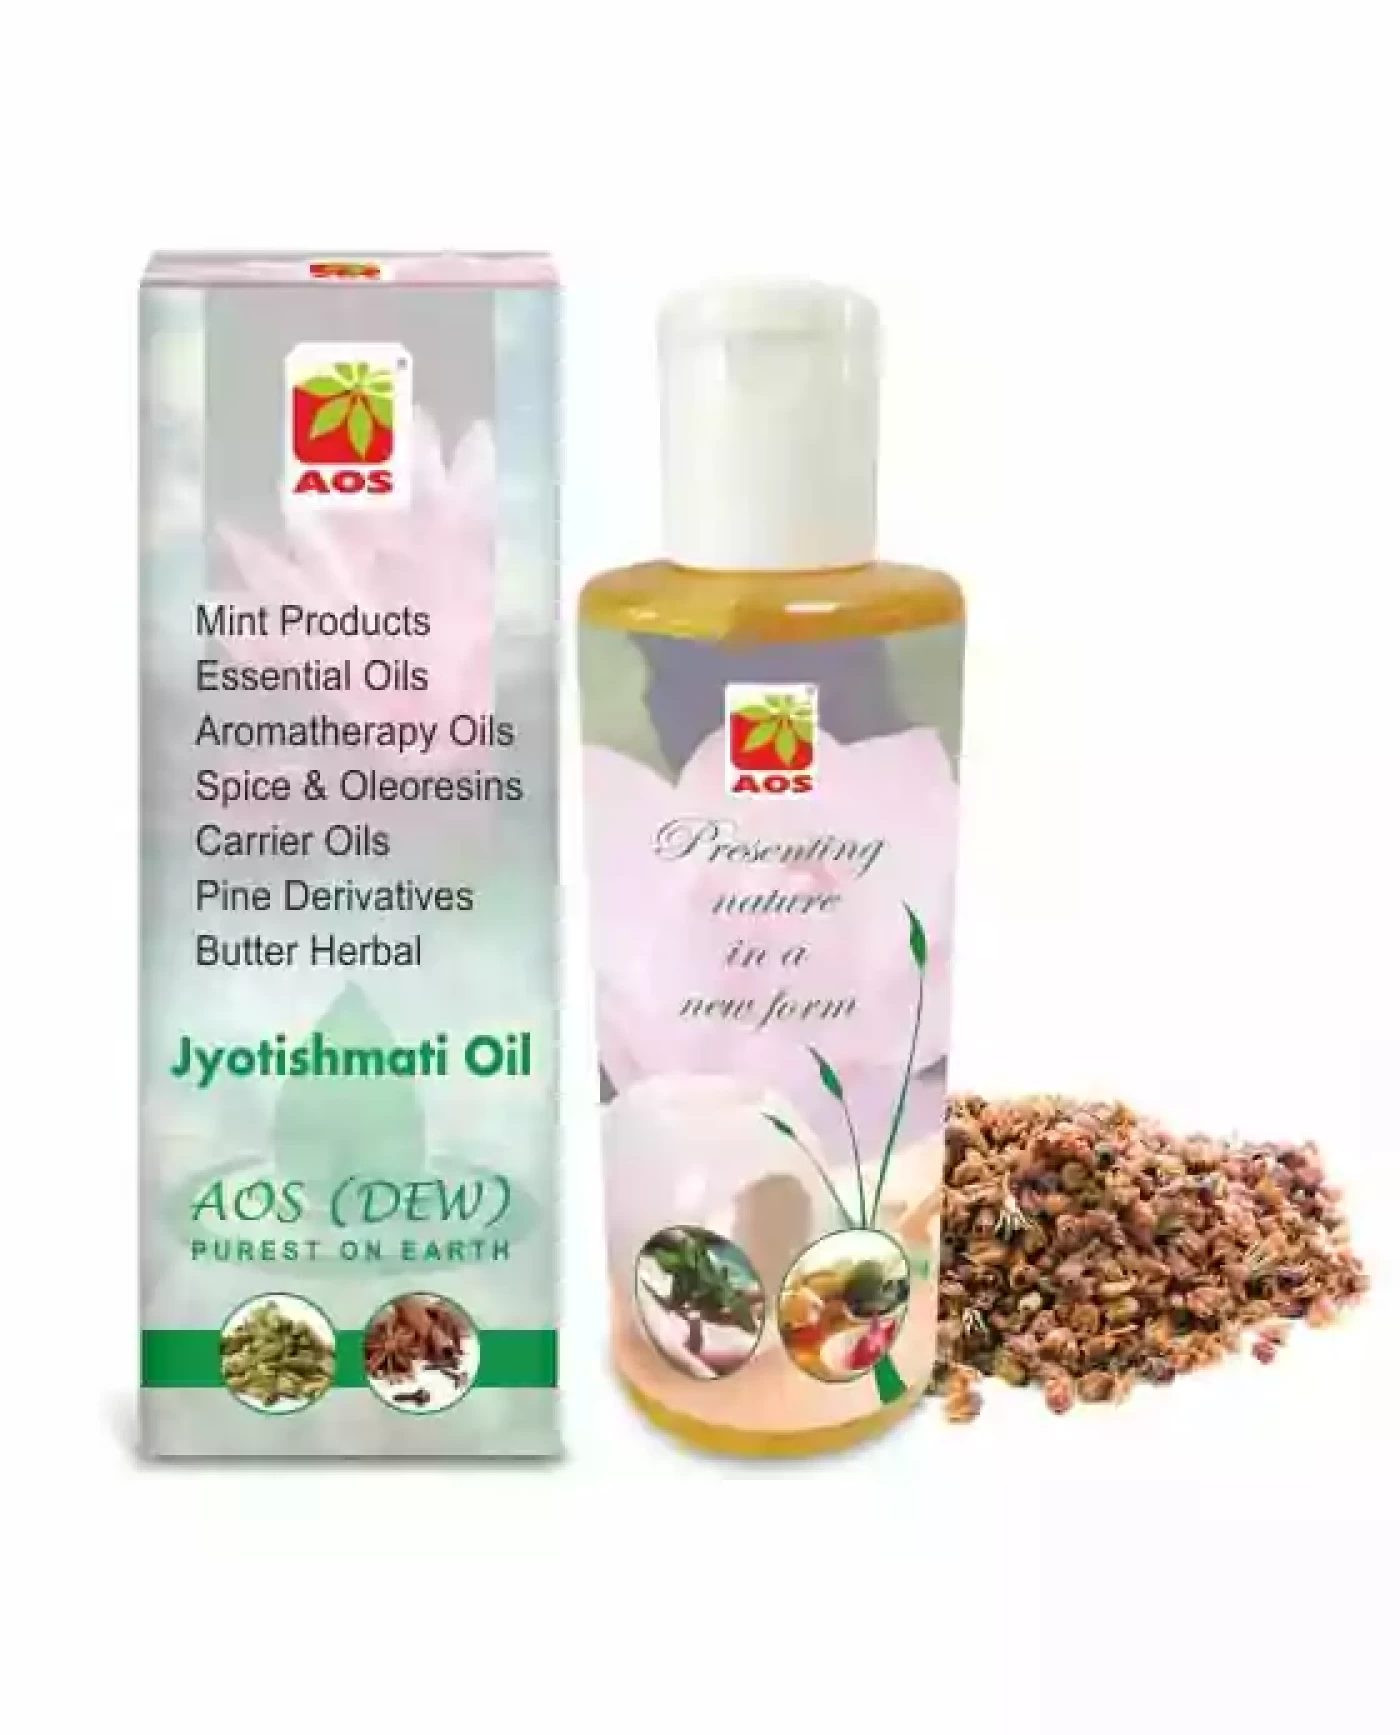 Jyotishmati Oil